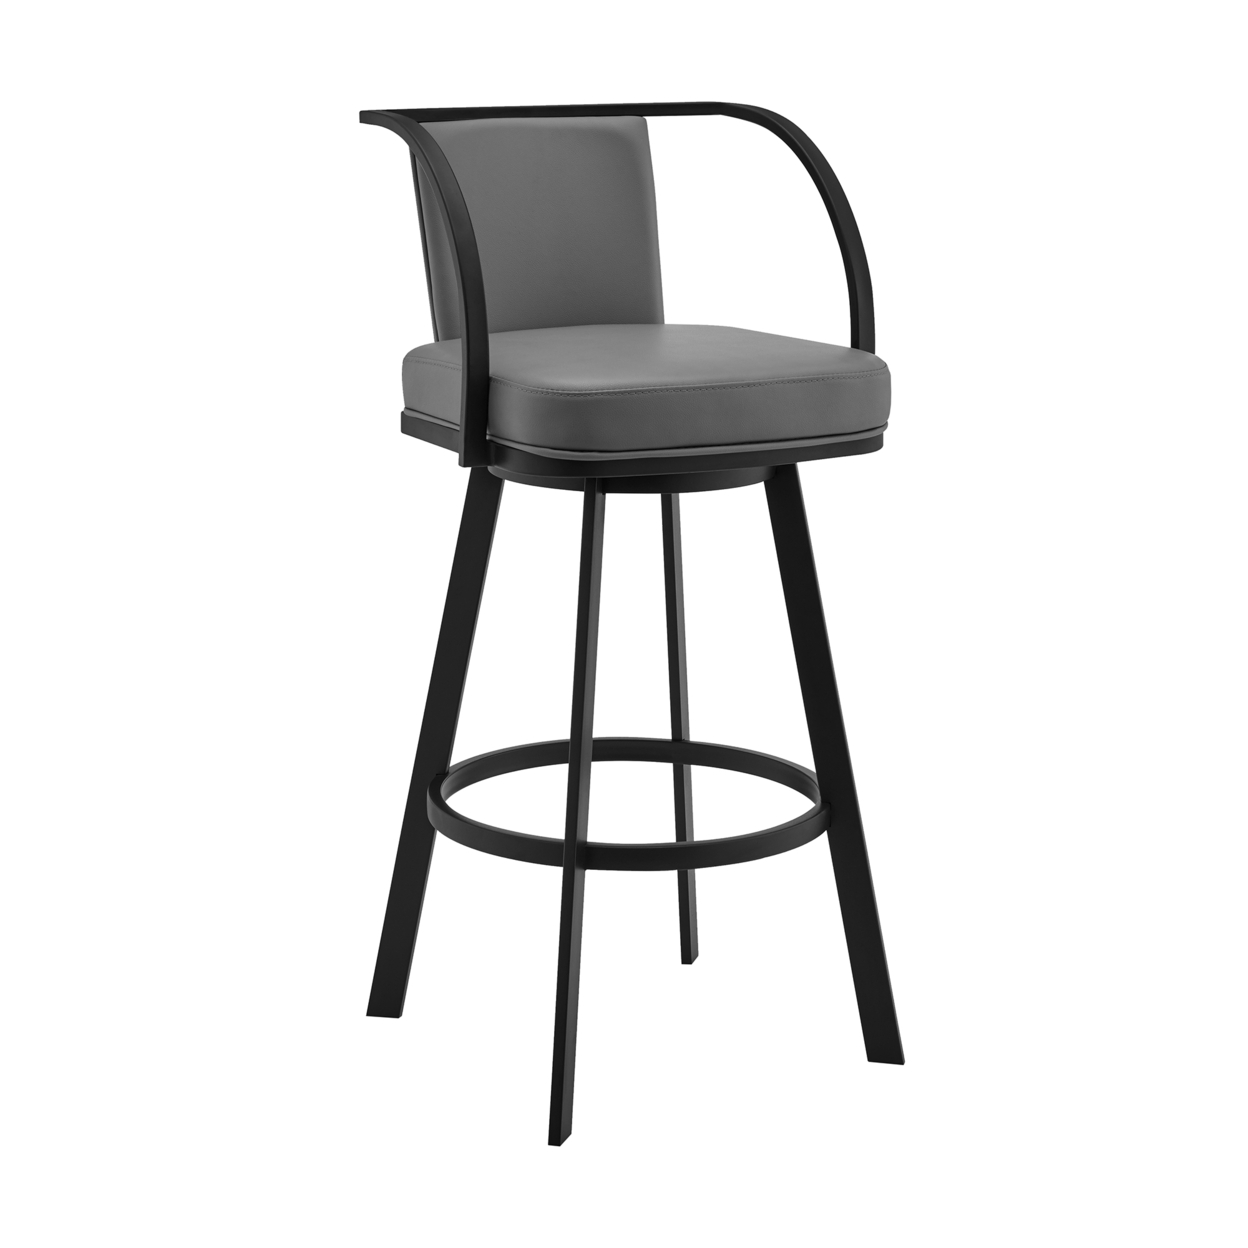 Ovn 30 Inch Modern Swivel Barstool Chair, Gray Faux Leather, Black Steel- Saltoro Sherpi